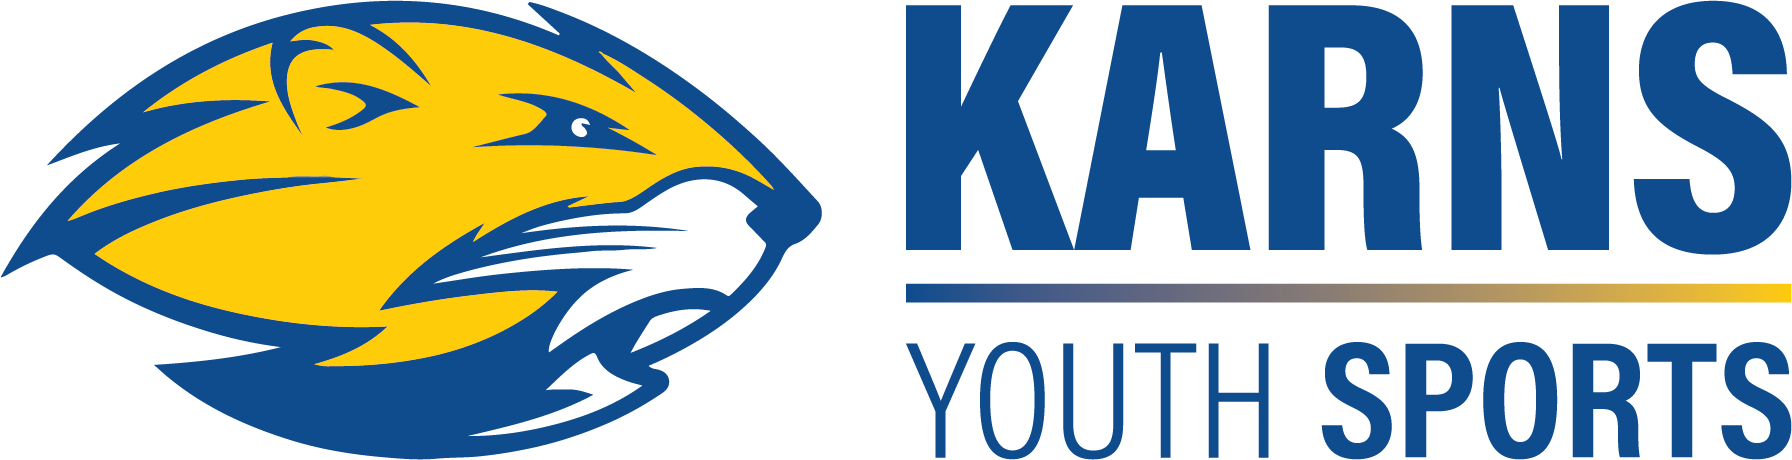 Karns Youth Sports 